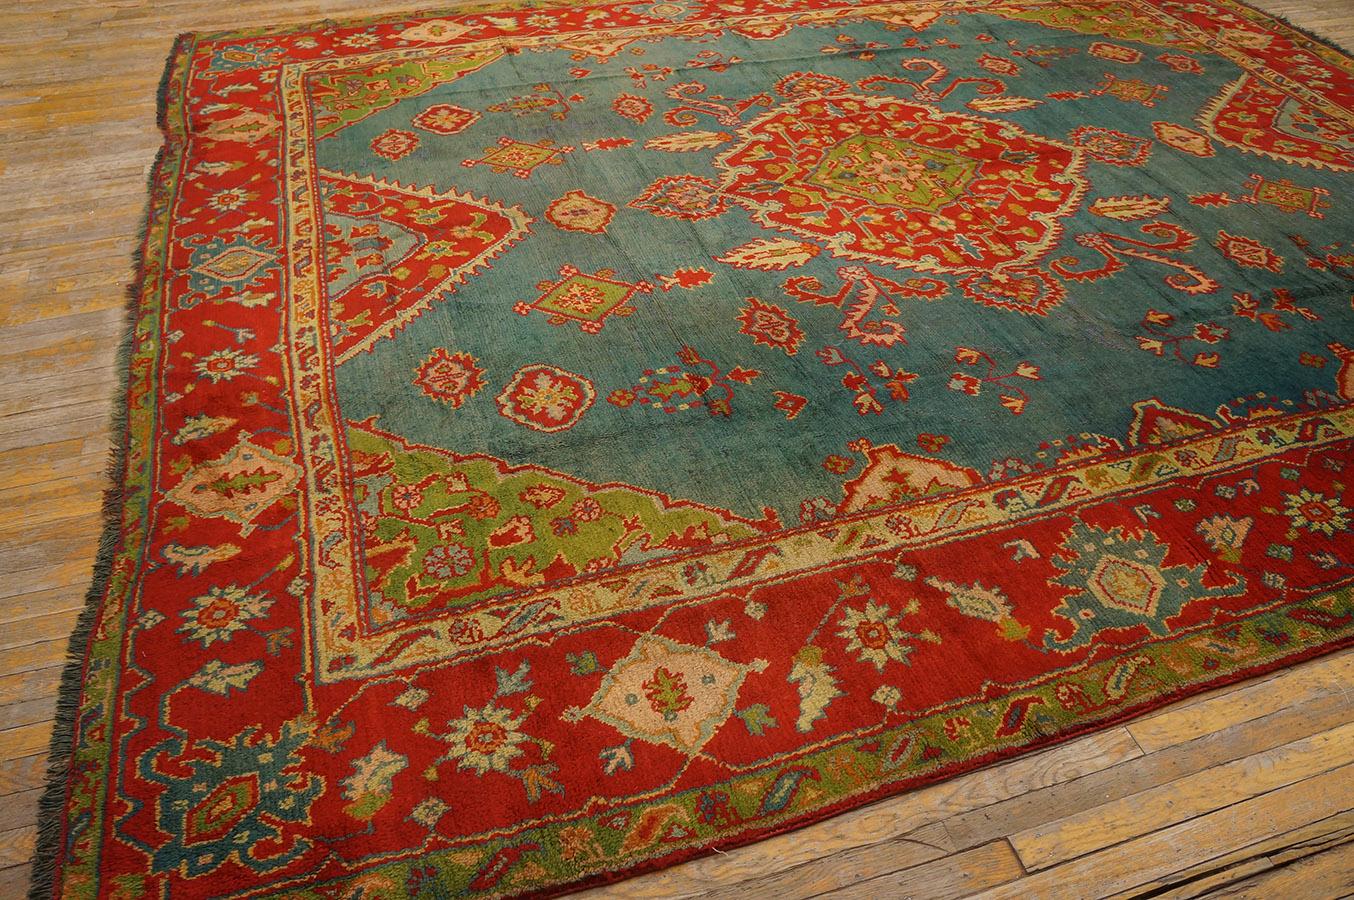 Late 19th Century Turkish Oushak Carpet ( 11' 2'' x 13' 1'' - 340 x 398 cm ) For Sale 9